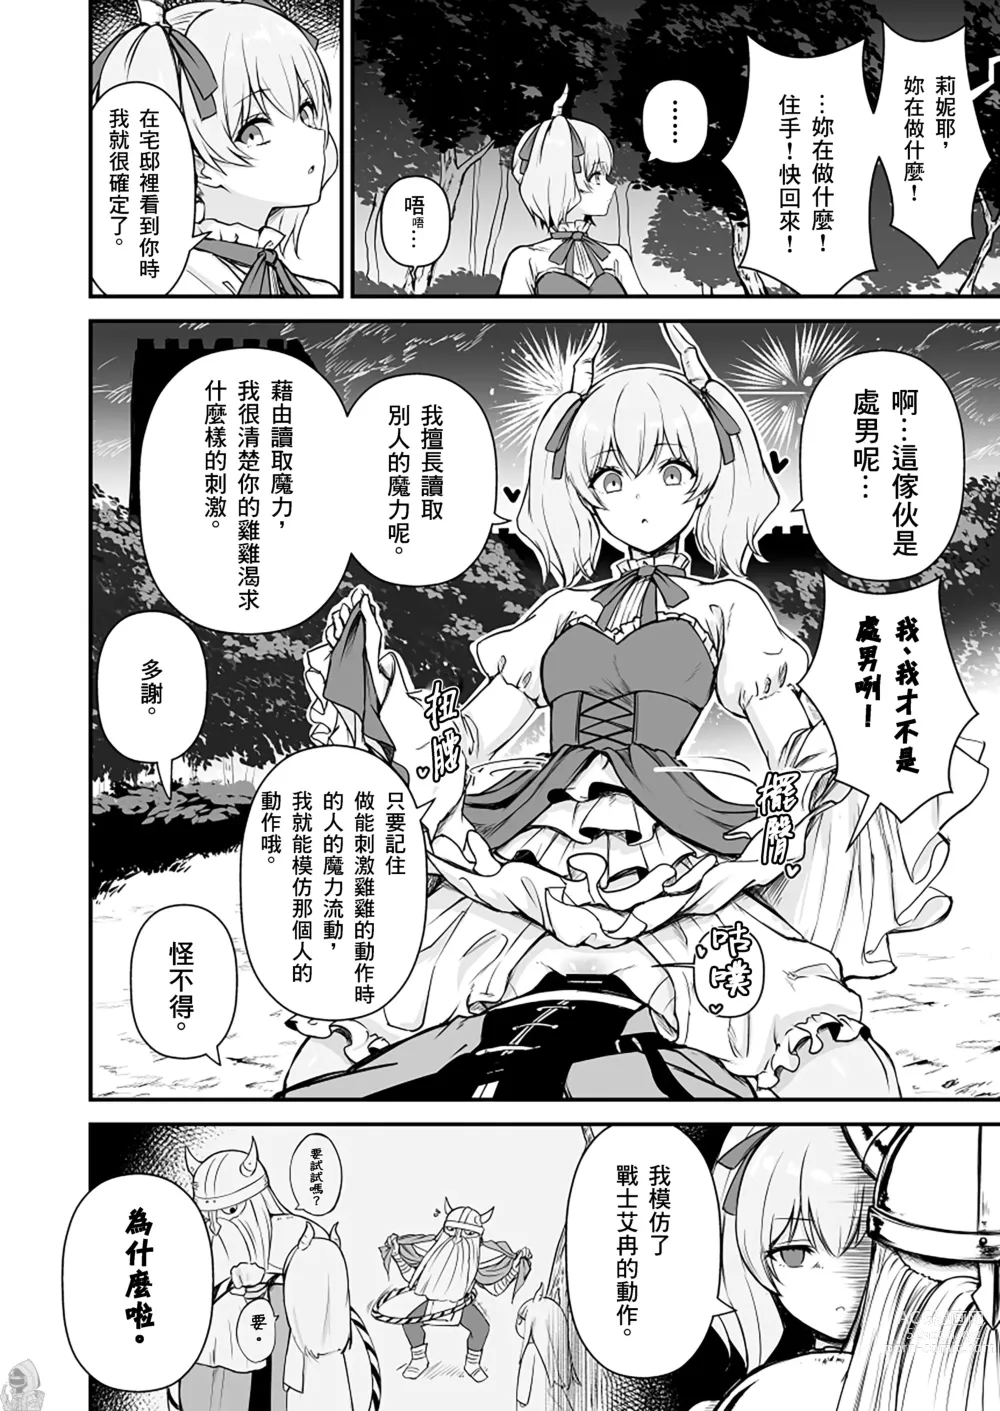 Page 4 of manga その祖先は獲物を誘き寄せるために物陰から「たすけて❤️」と言葉を発した魔物だよ